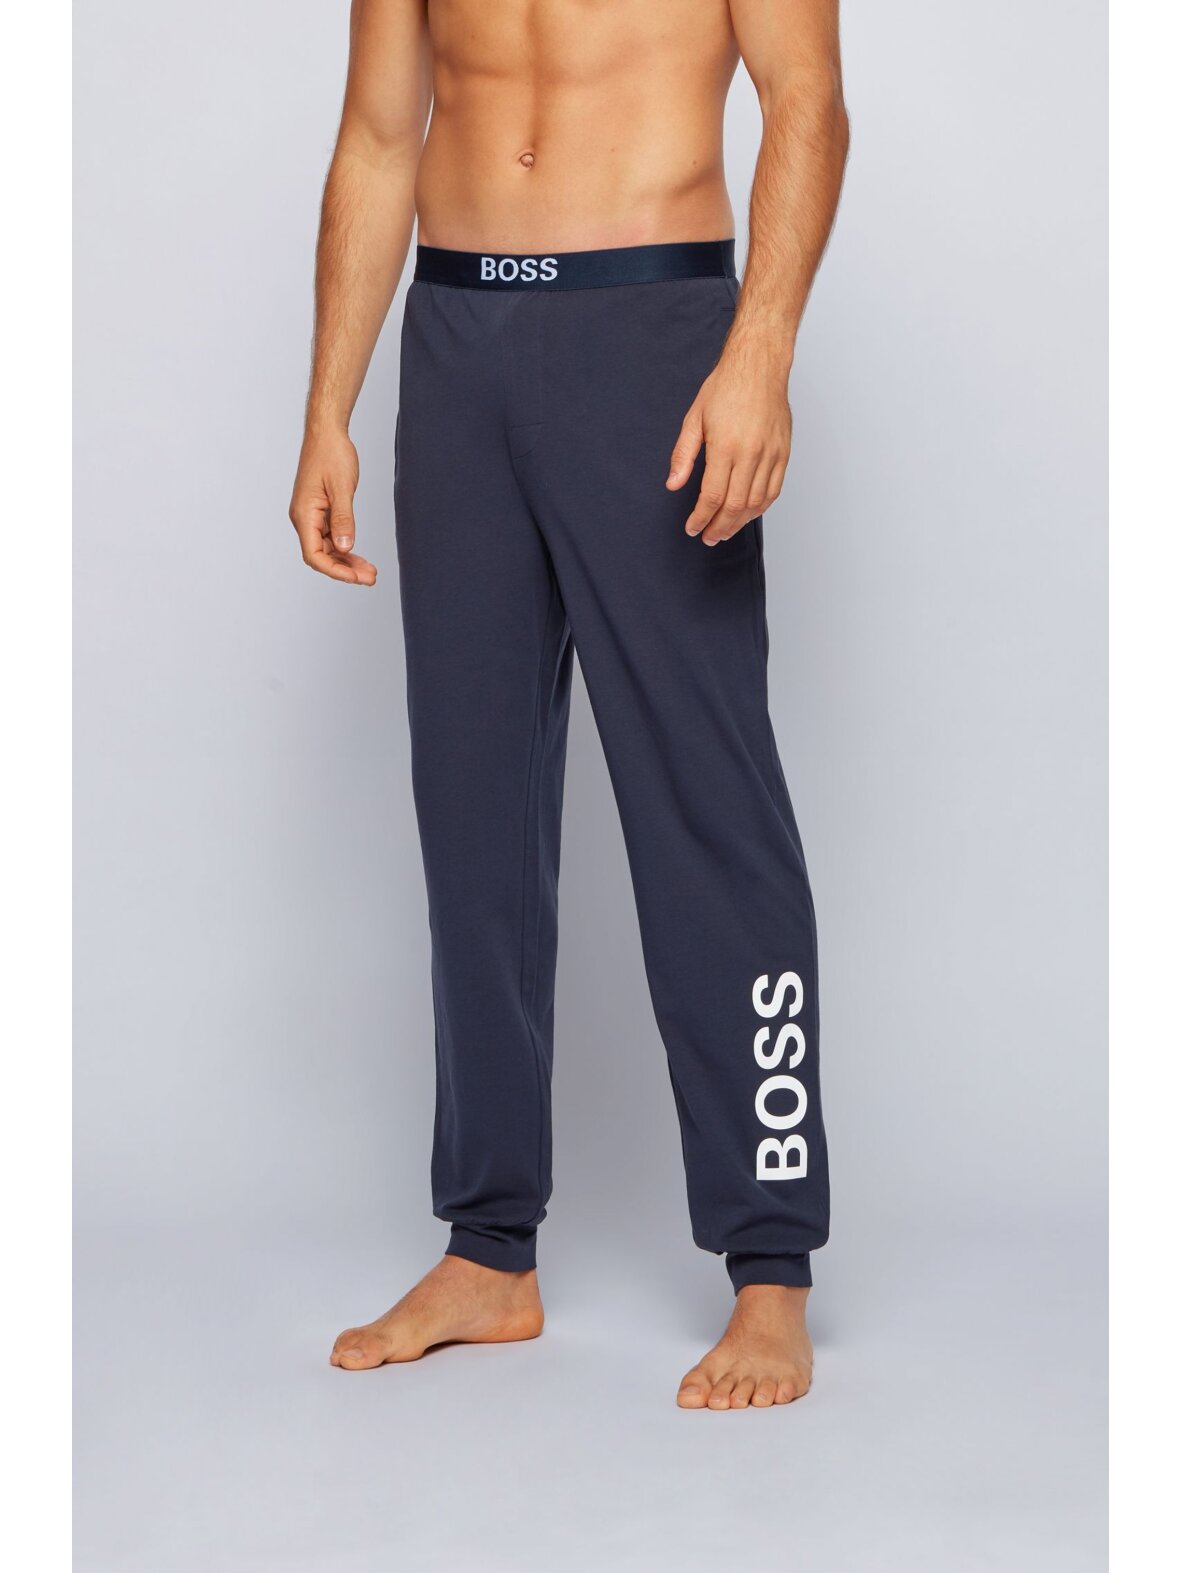 CC Christensen - Pyjamas buks - Hugo Boss - IDENTITY PANTS